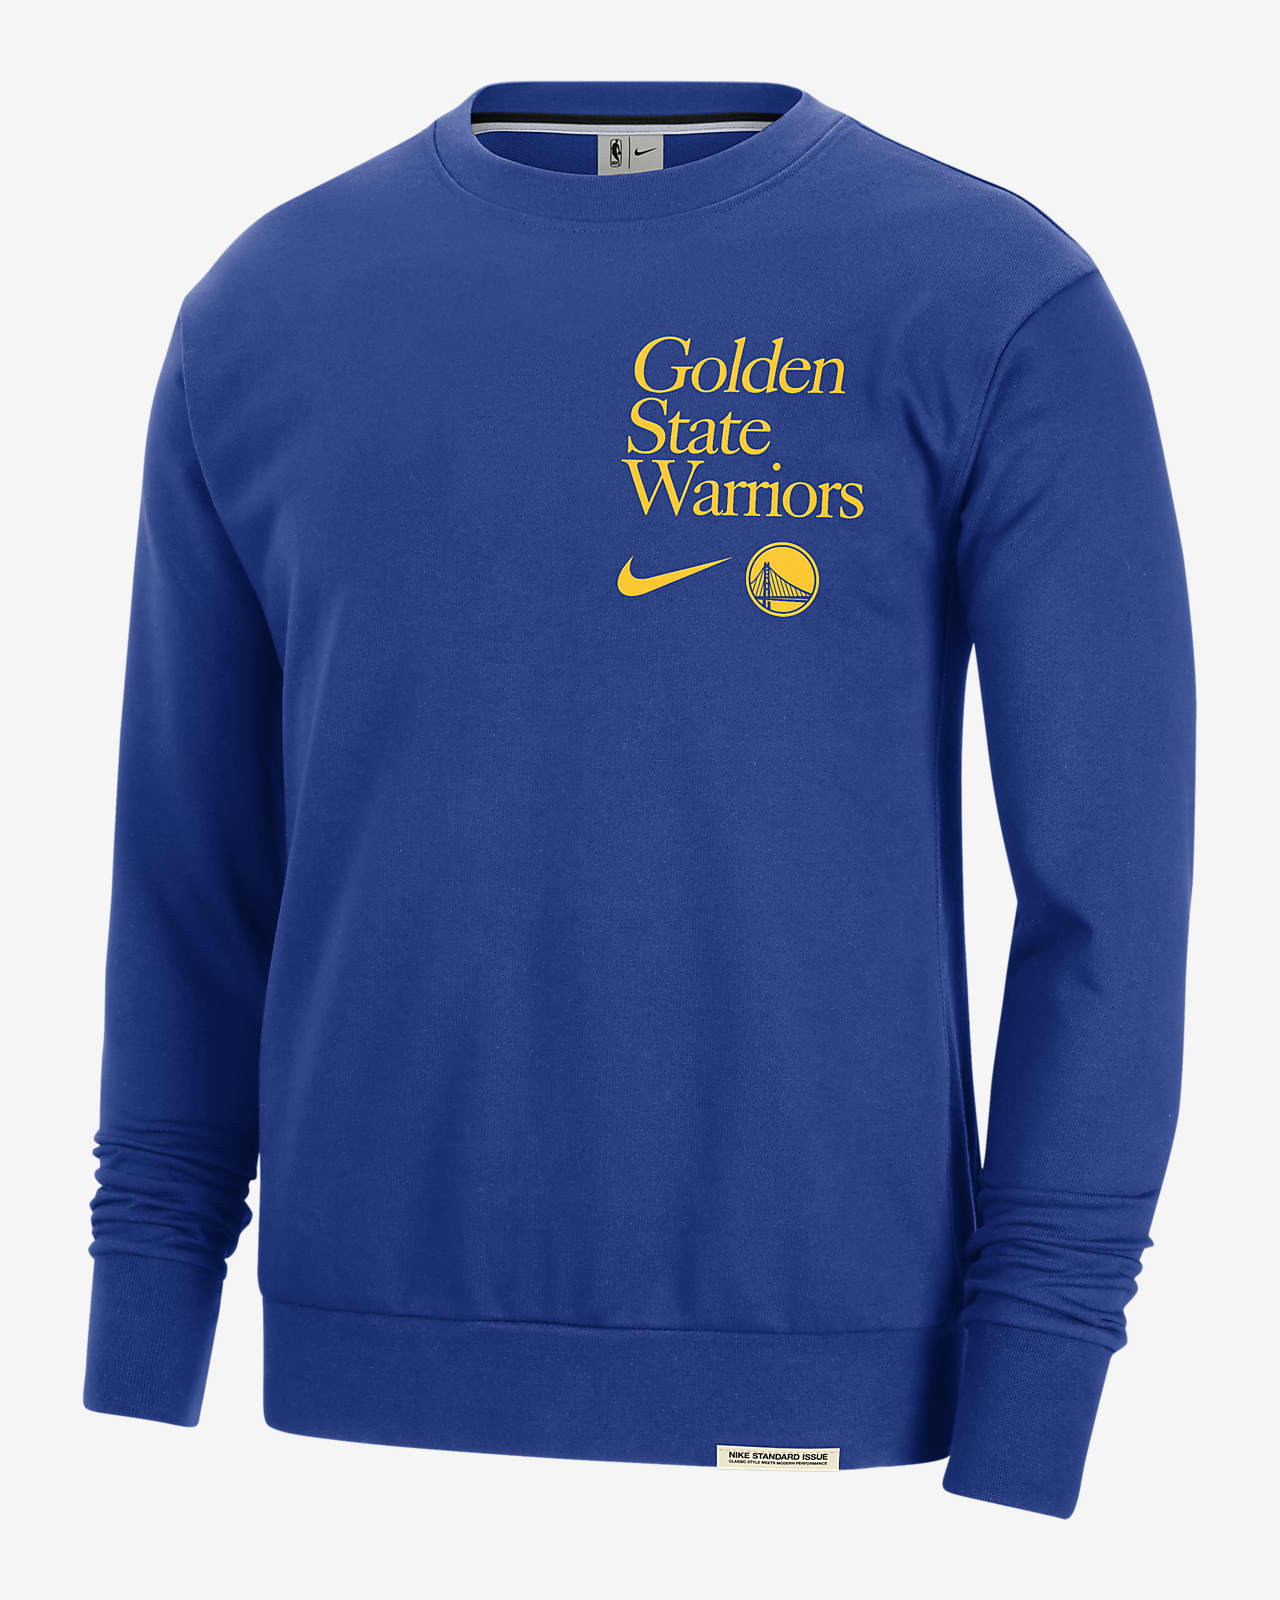 Golden State Warriors Standard Issue Men's Nike Dri-FIT NBA Crew-Neck Sweatshirt